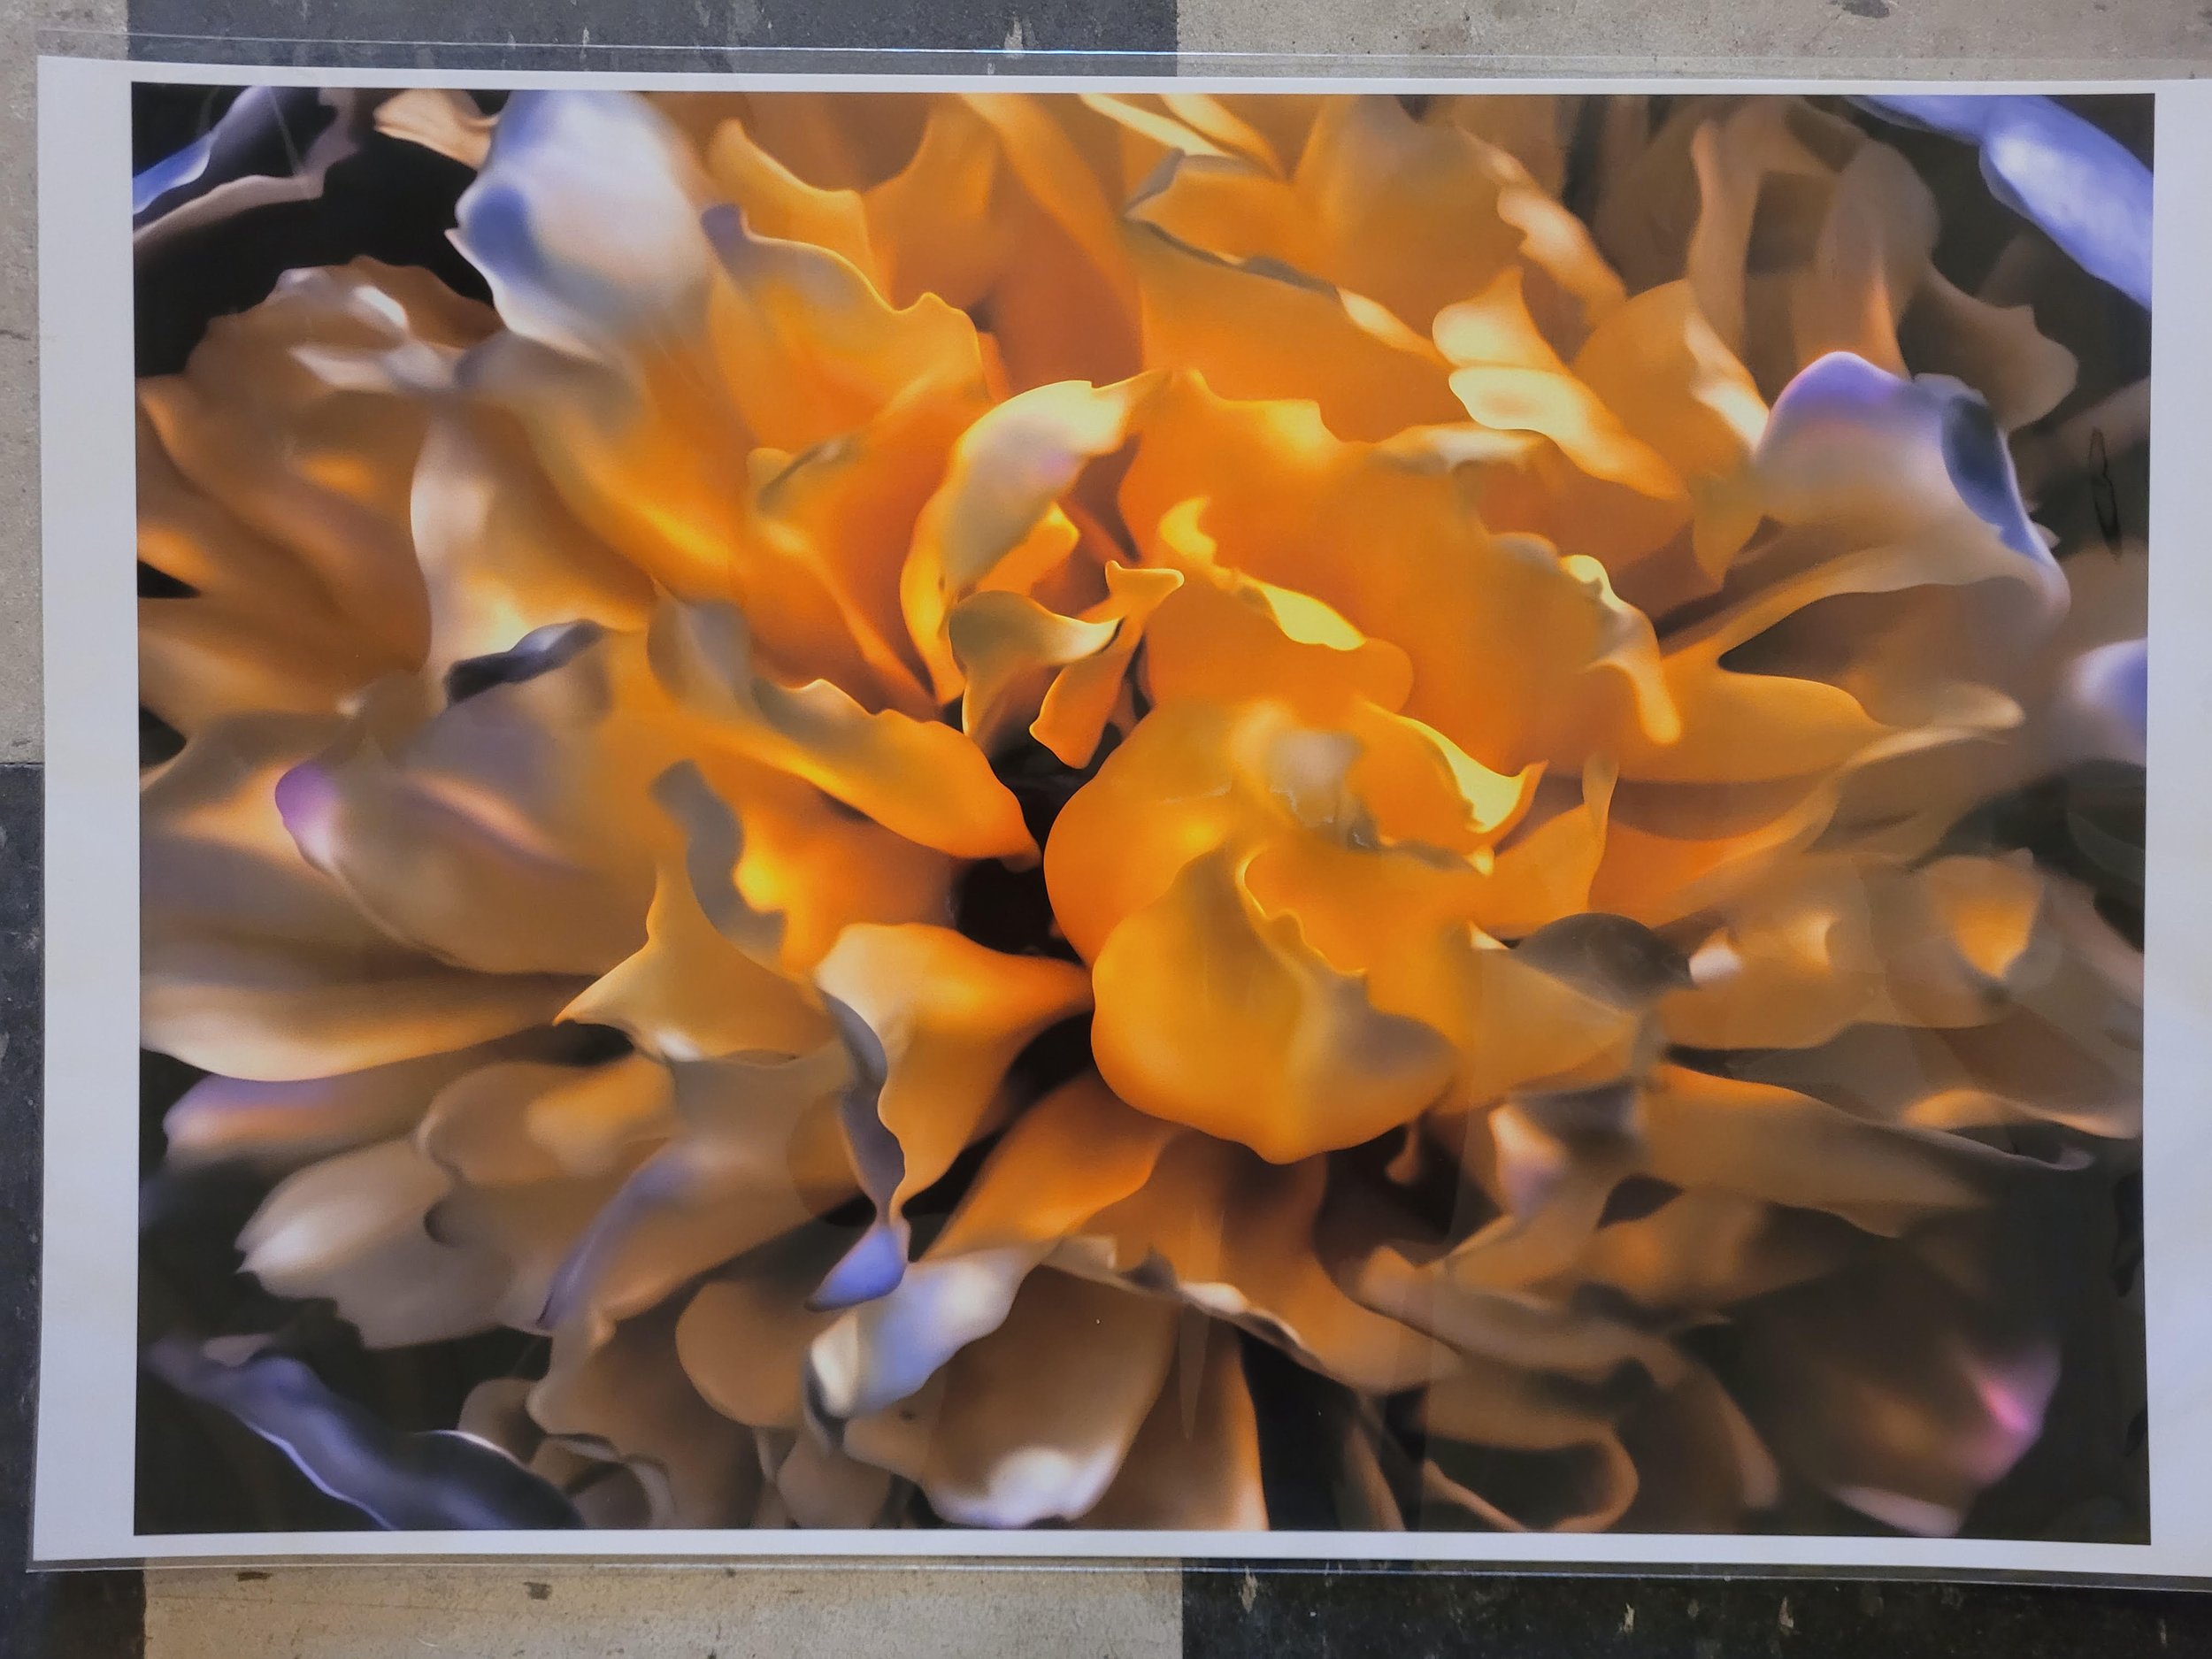  Joe Muir,  # 8,  From the Flower portfolio, 1/3, 2015-2020, Inkjet prints, 16 x 20 inches, $950. each (framed) 